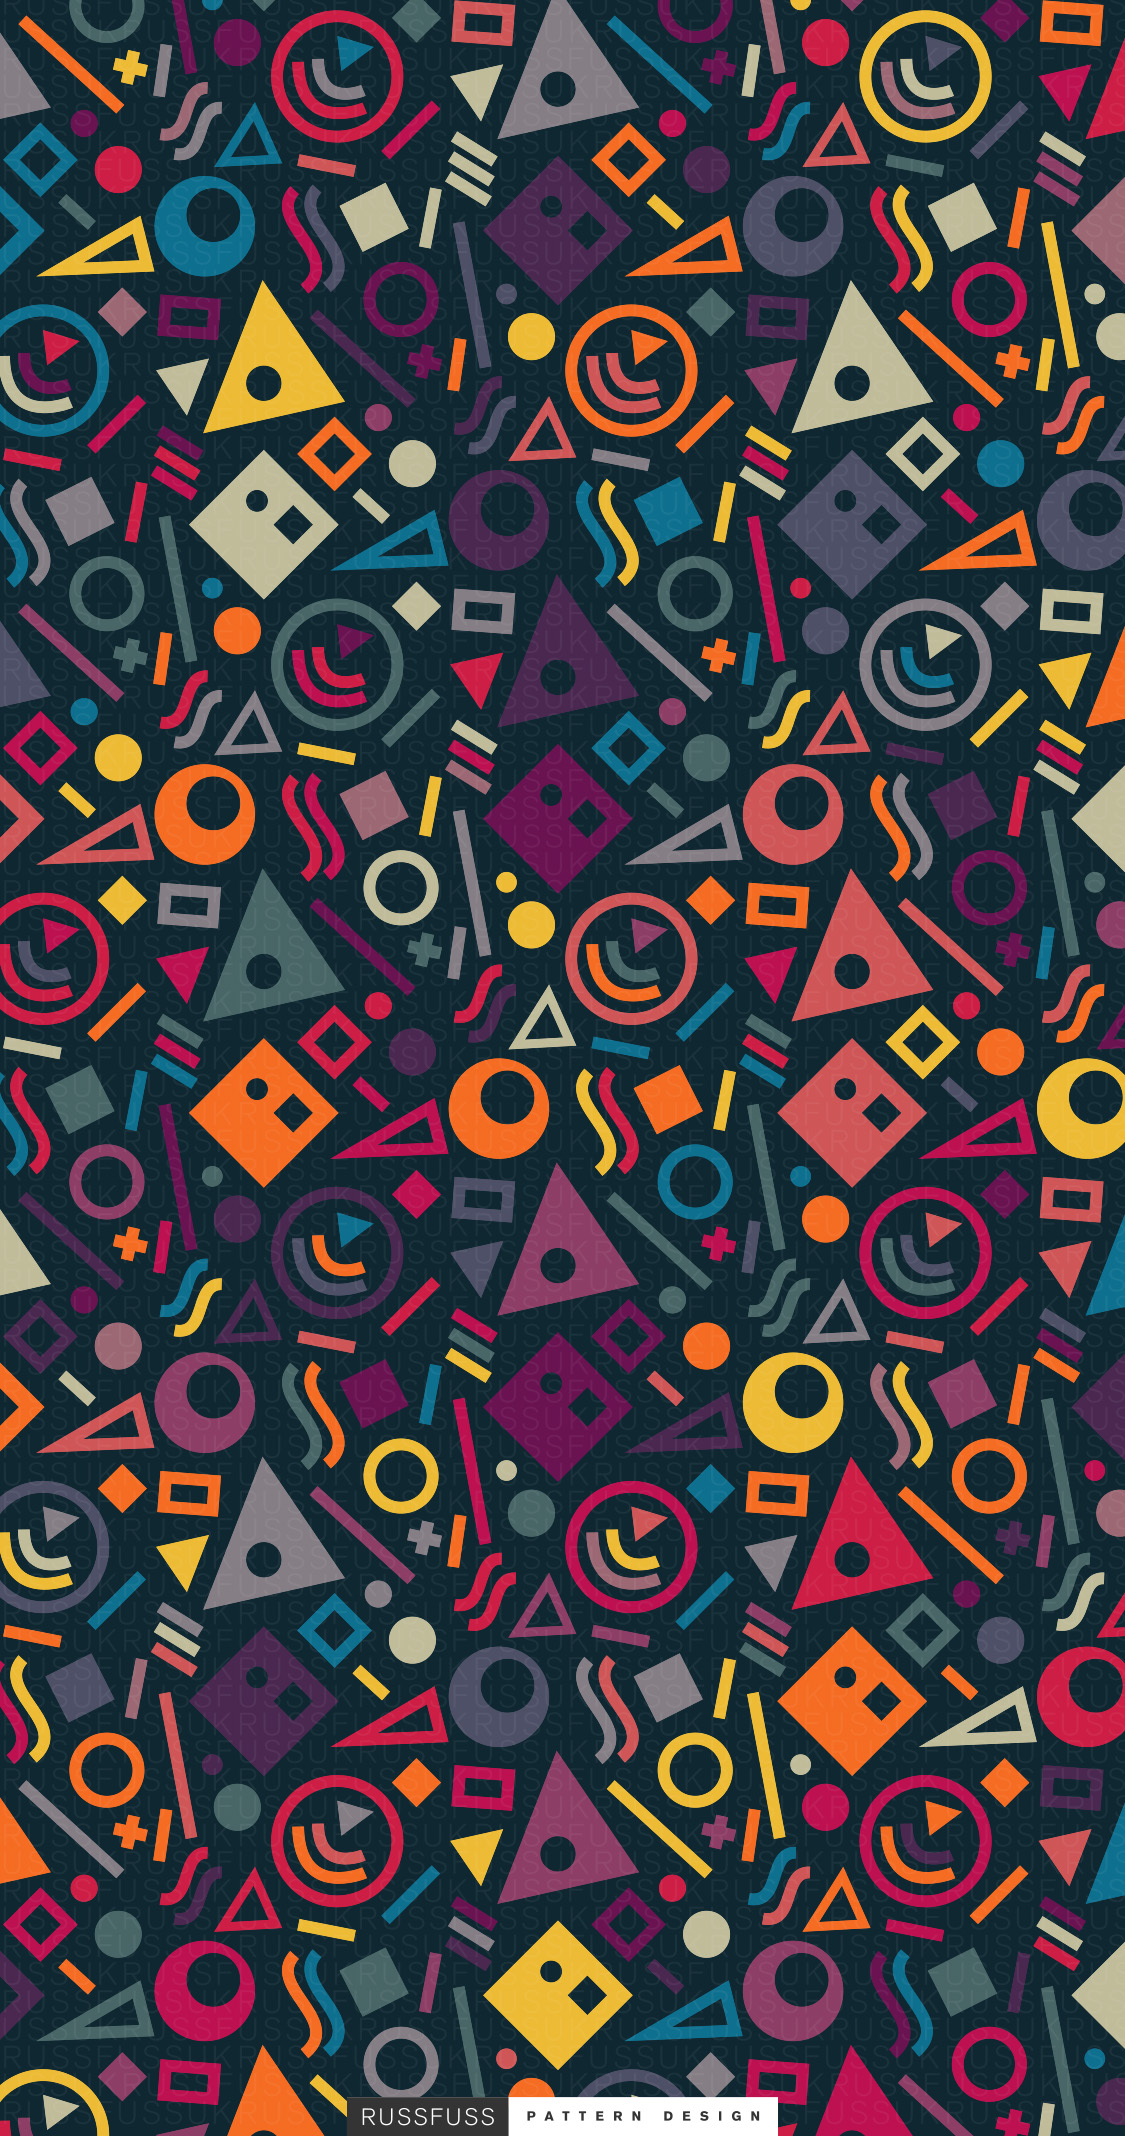 Phone Wallpapers | Russfuss Pattern Design